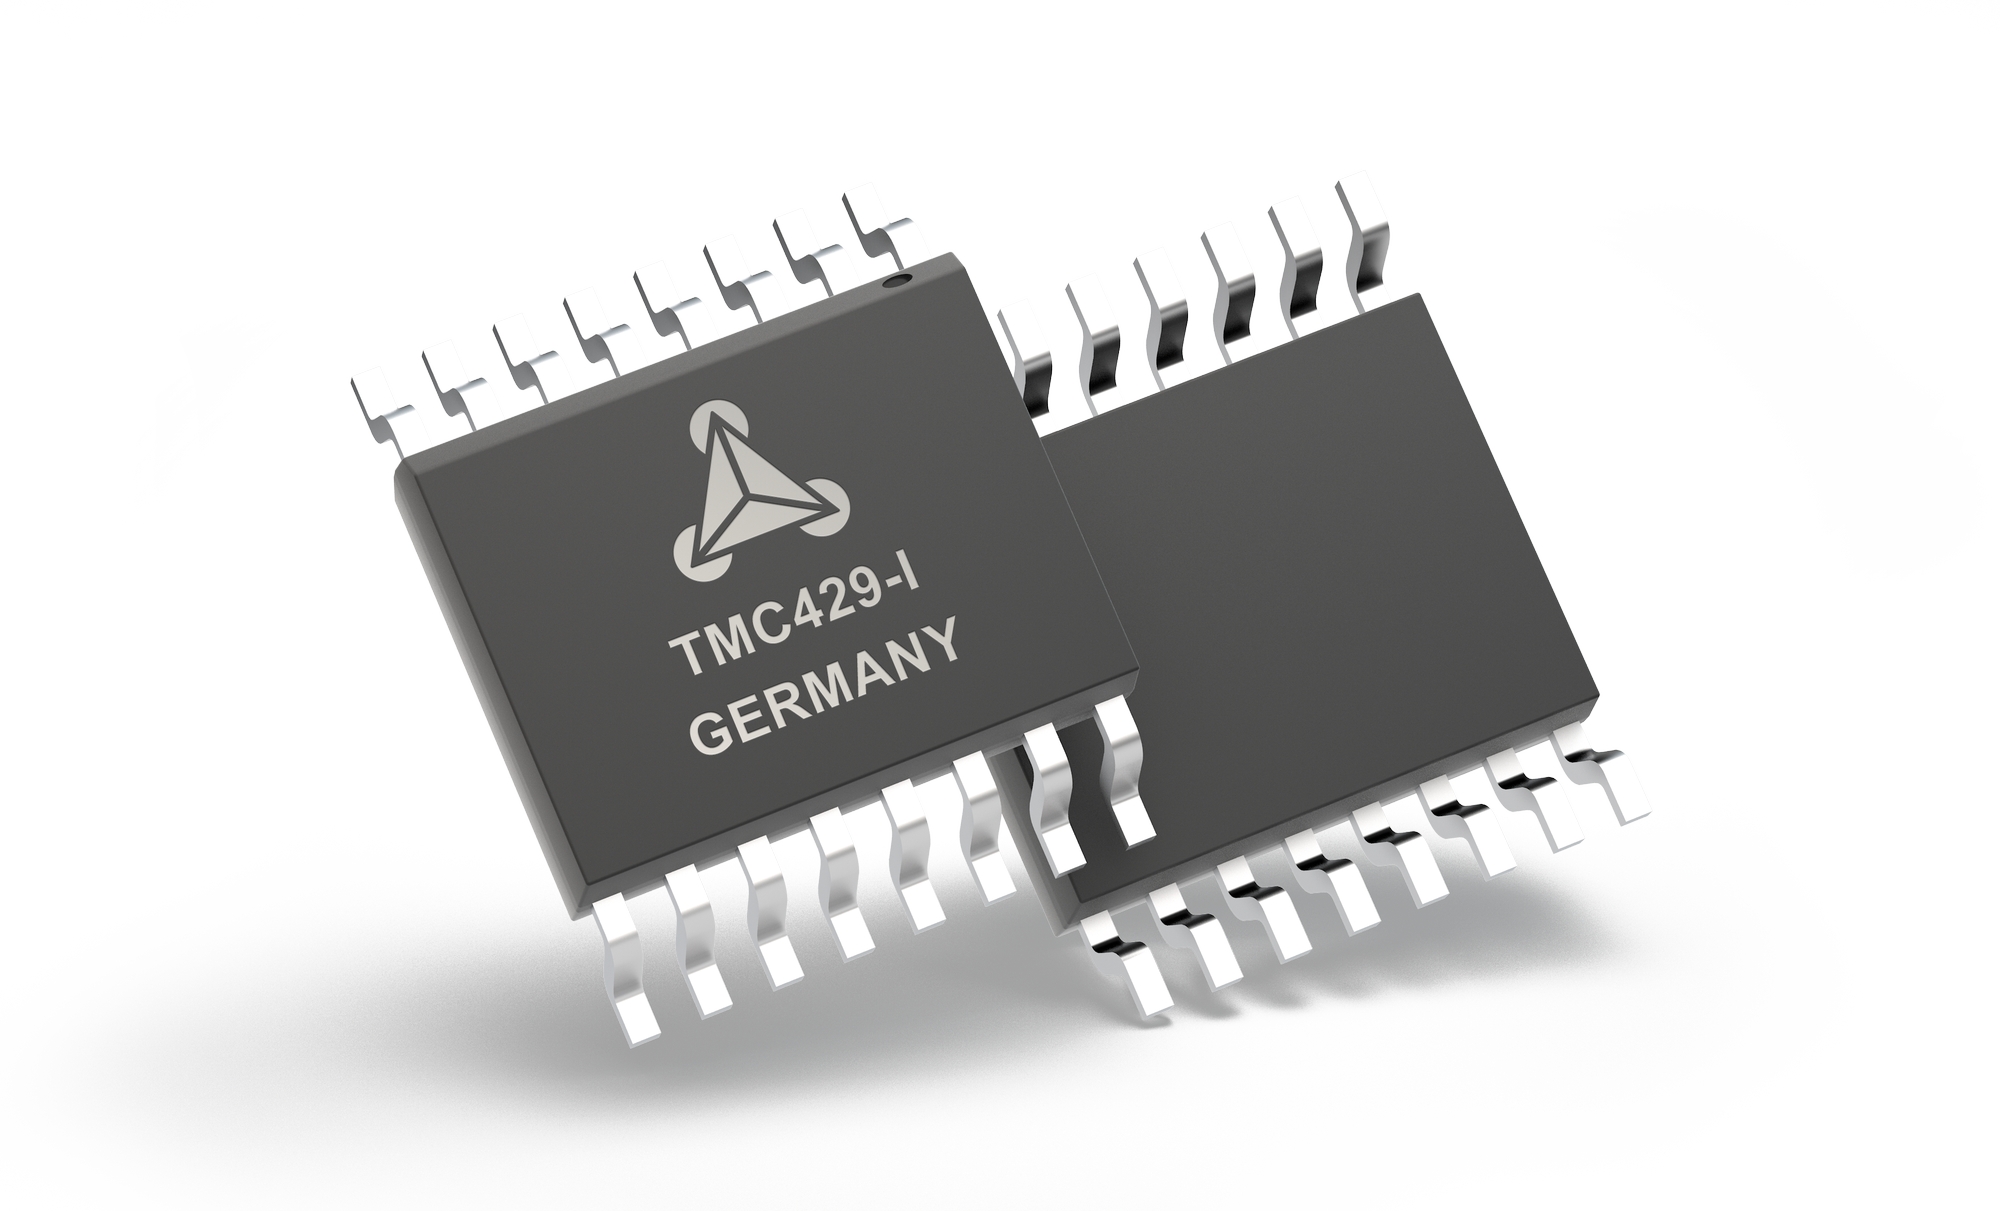 TMC429-I(Motion and Interface Controller ICs)